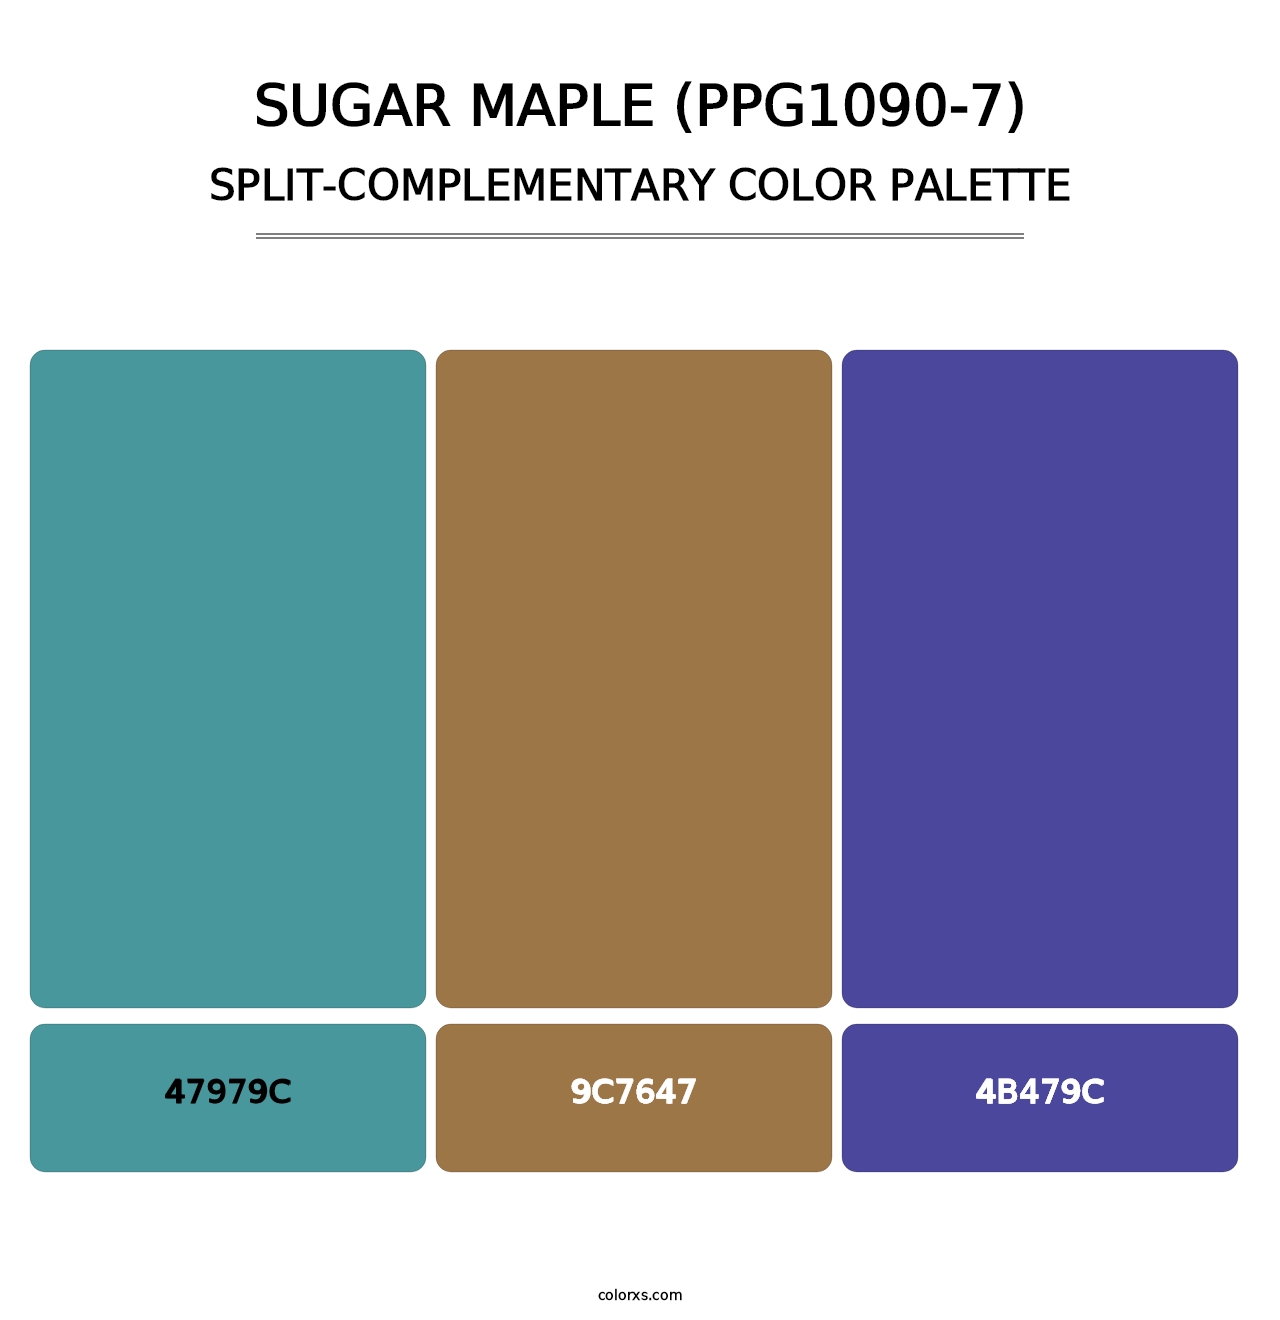 Sugar Maple (PPG1090-7) - Split-Complementary Color Palette